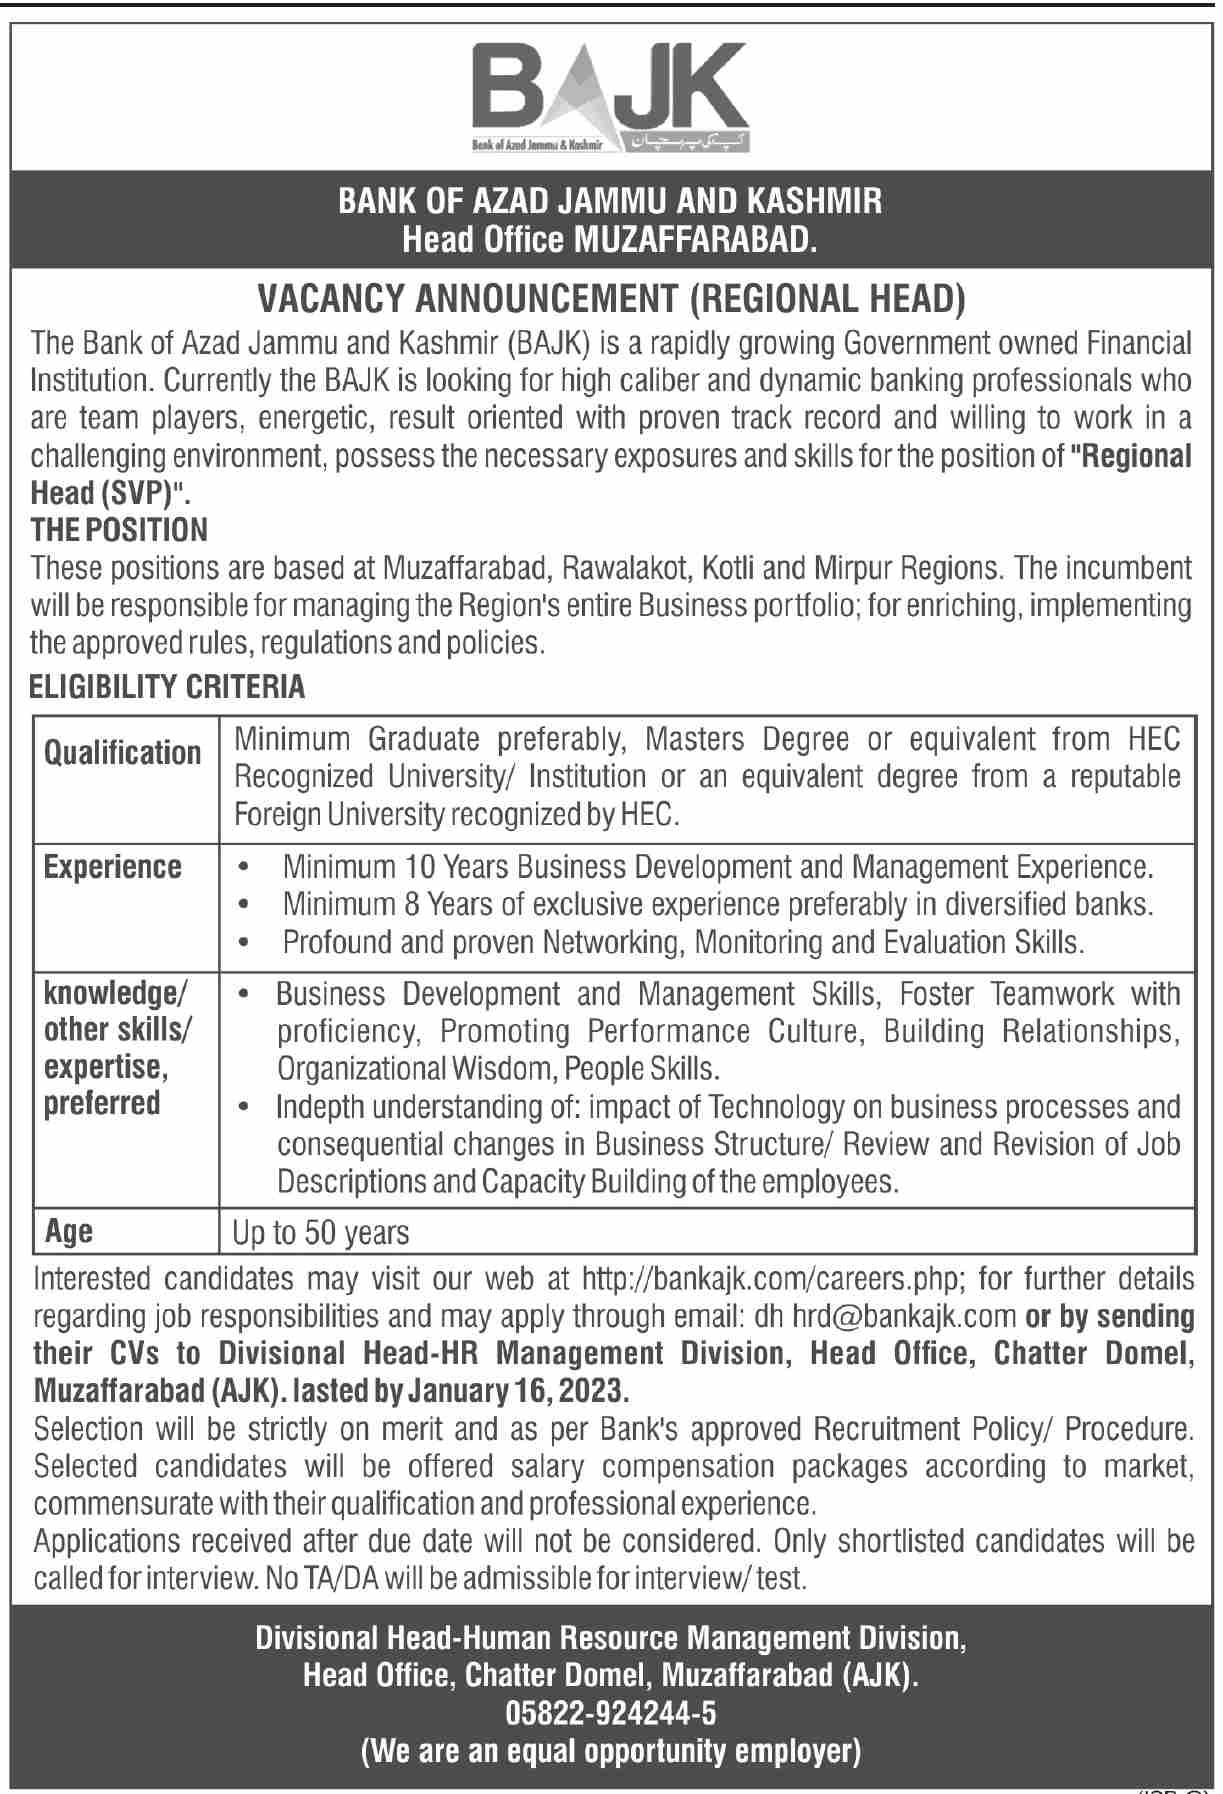 BAJK Jobs 2023  | Bank of Azad Jammu & Kashmir Headquarters  Announced Latest Recruitments